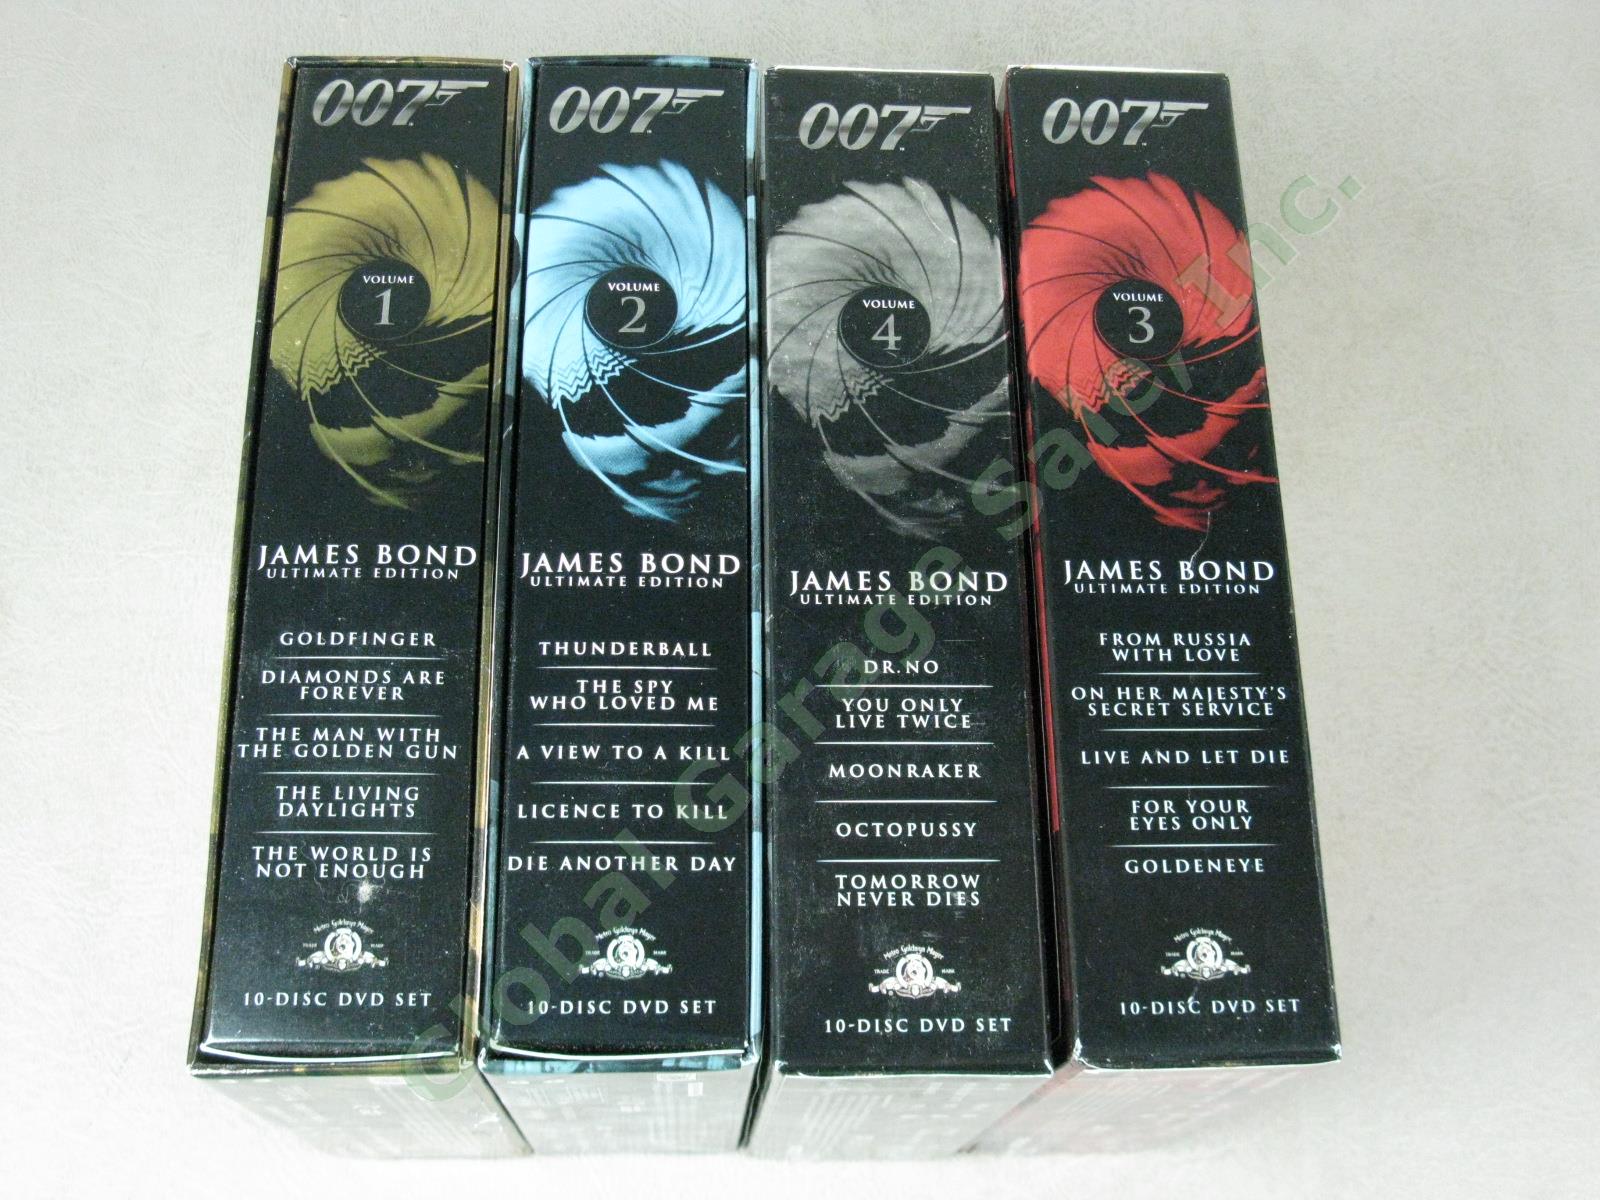 007 James Bond 46-DVD Collection Lot Ultimate Edition Box Sets Volume 1 2 3 4 NR 3